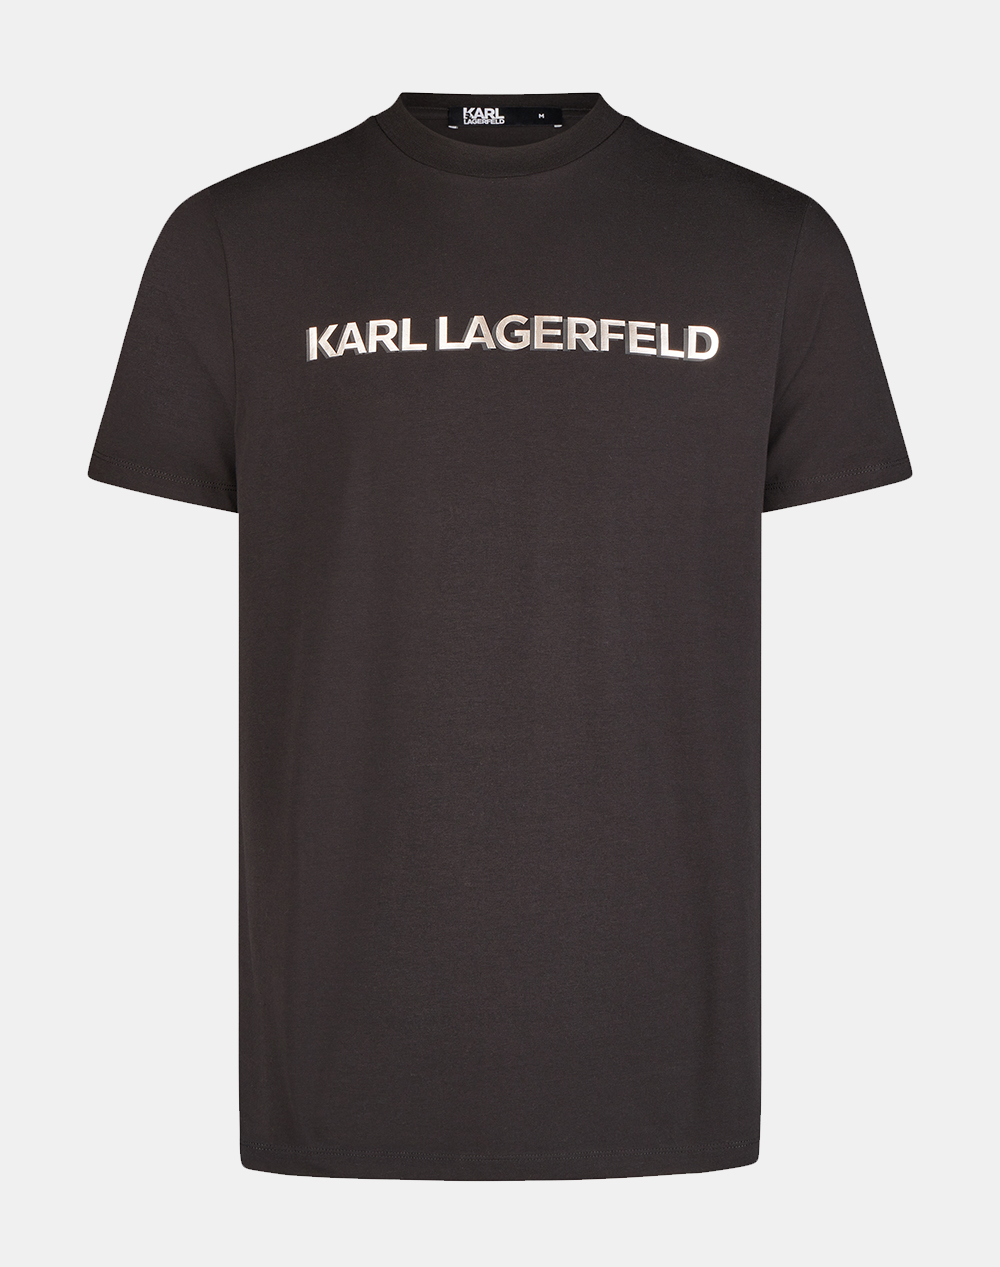 KARL LAGERFELD T-SHIRT CREWNECK 755053-542221-990 Black